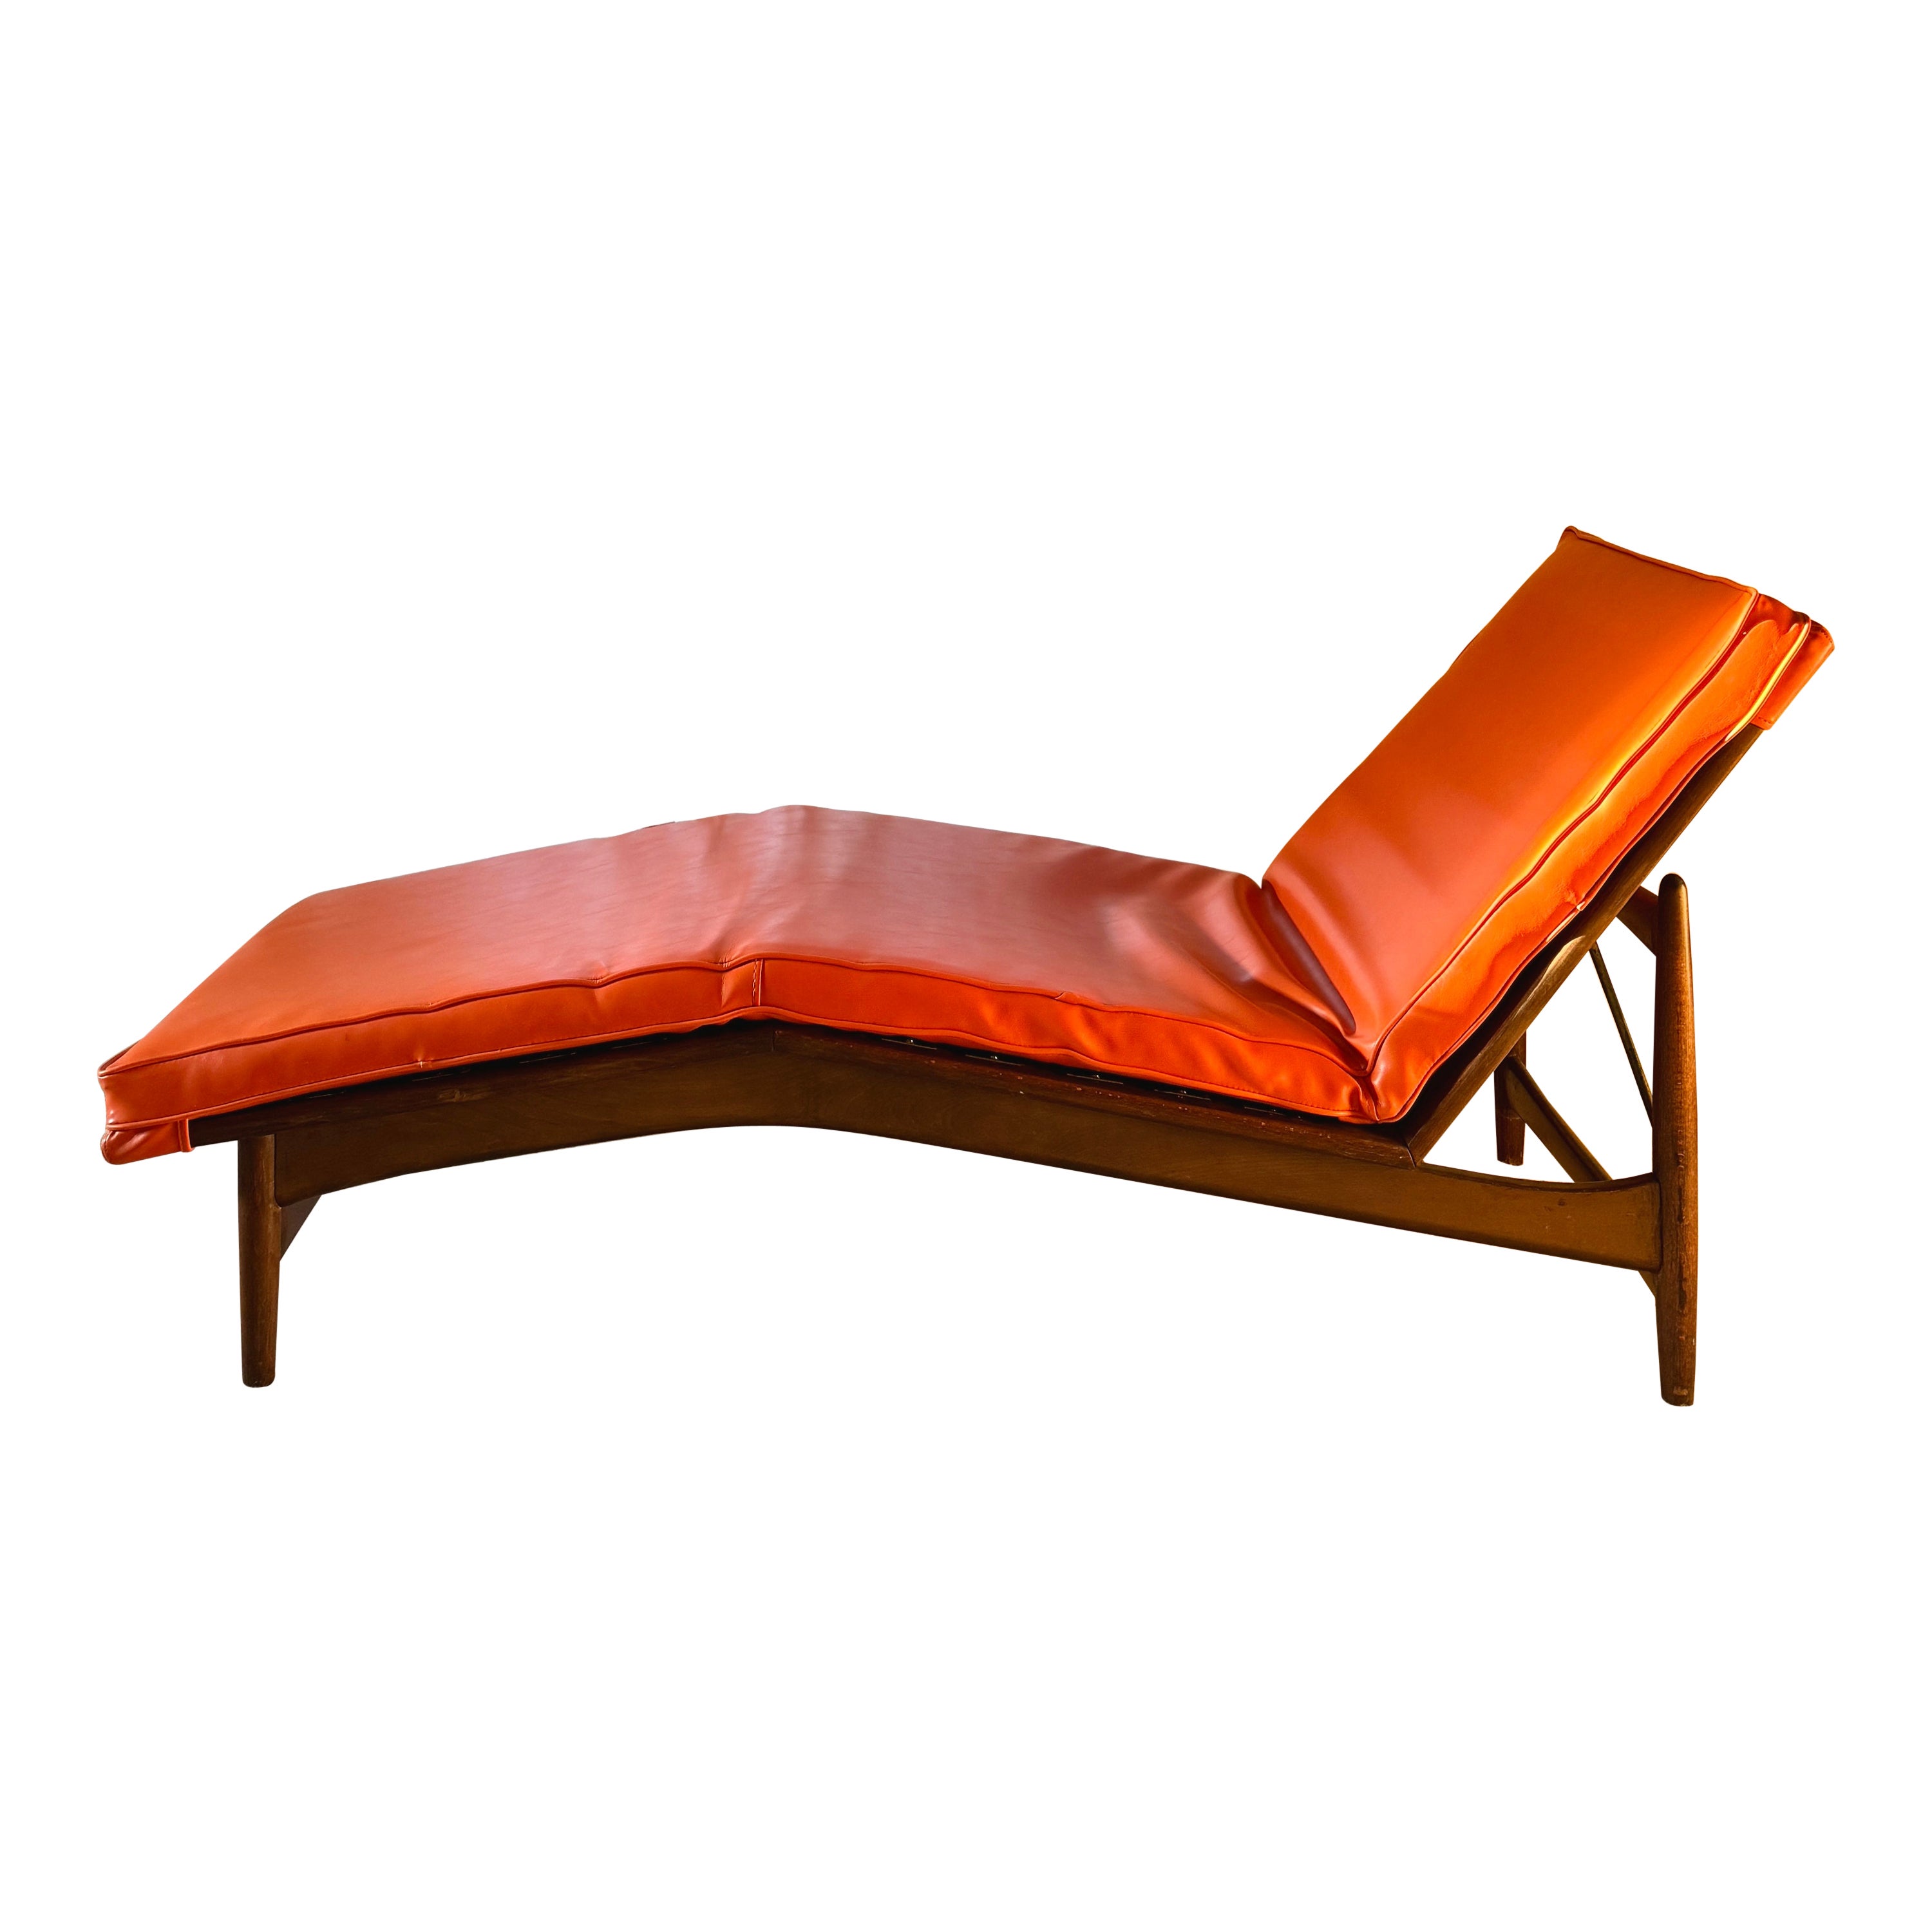 A beautiful mid century modern Danish lounge chair by Ib Kofod Larsen for Selig